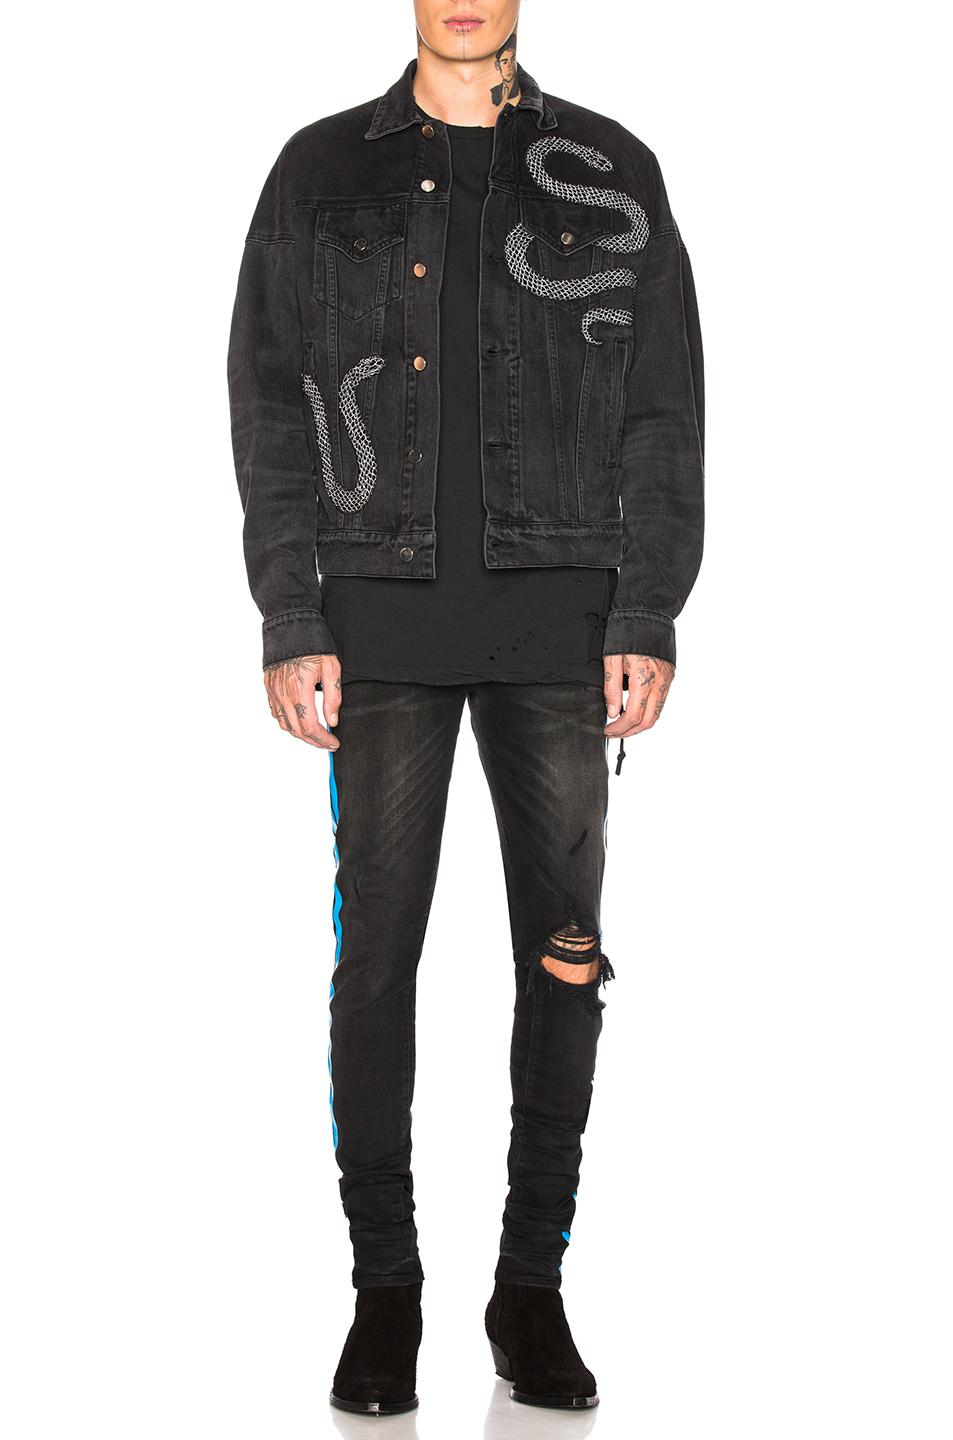 Amiri Cotton Embroidered Snake Denim Jacket in Black for Men - Lyst